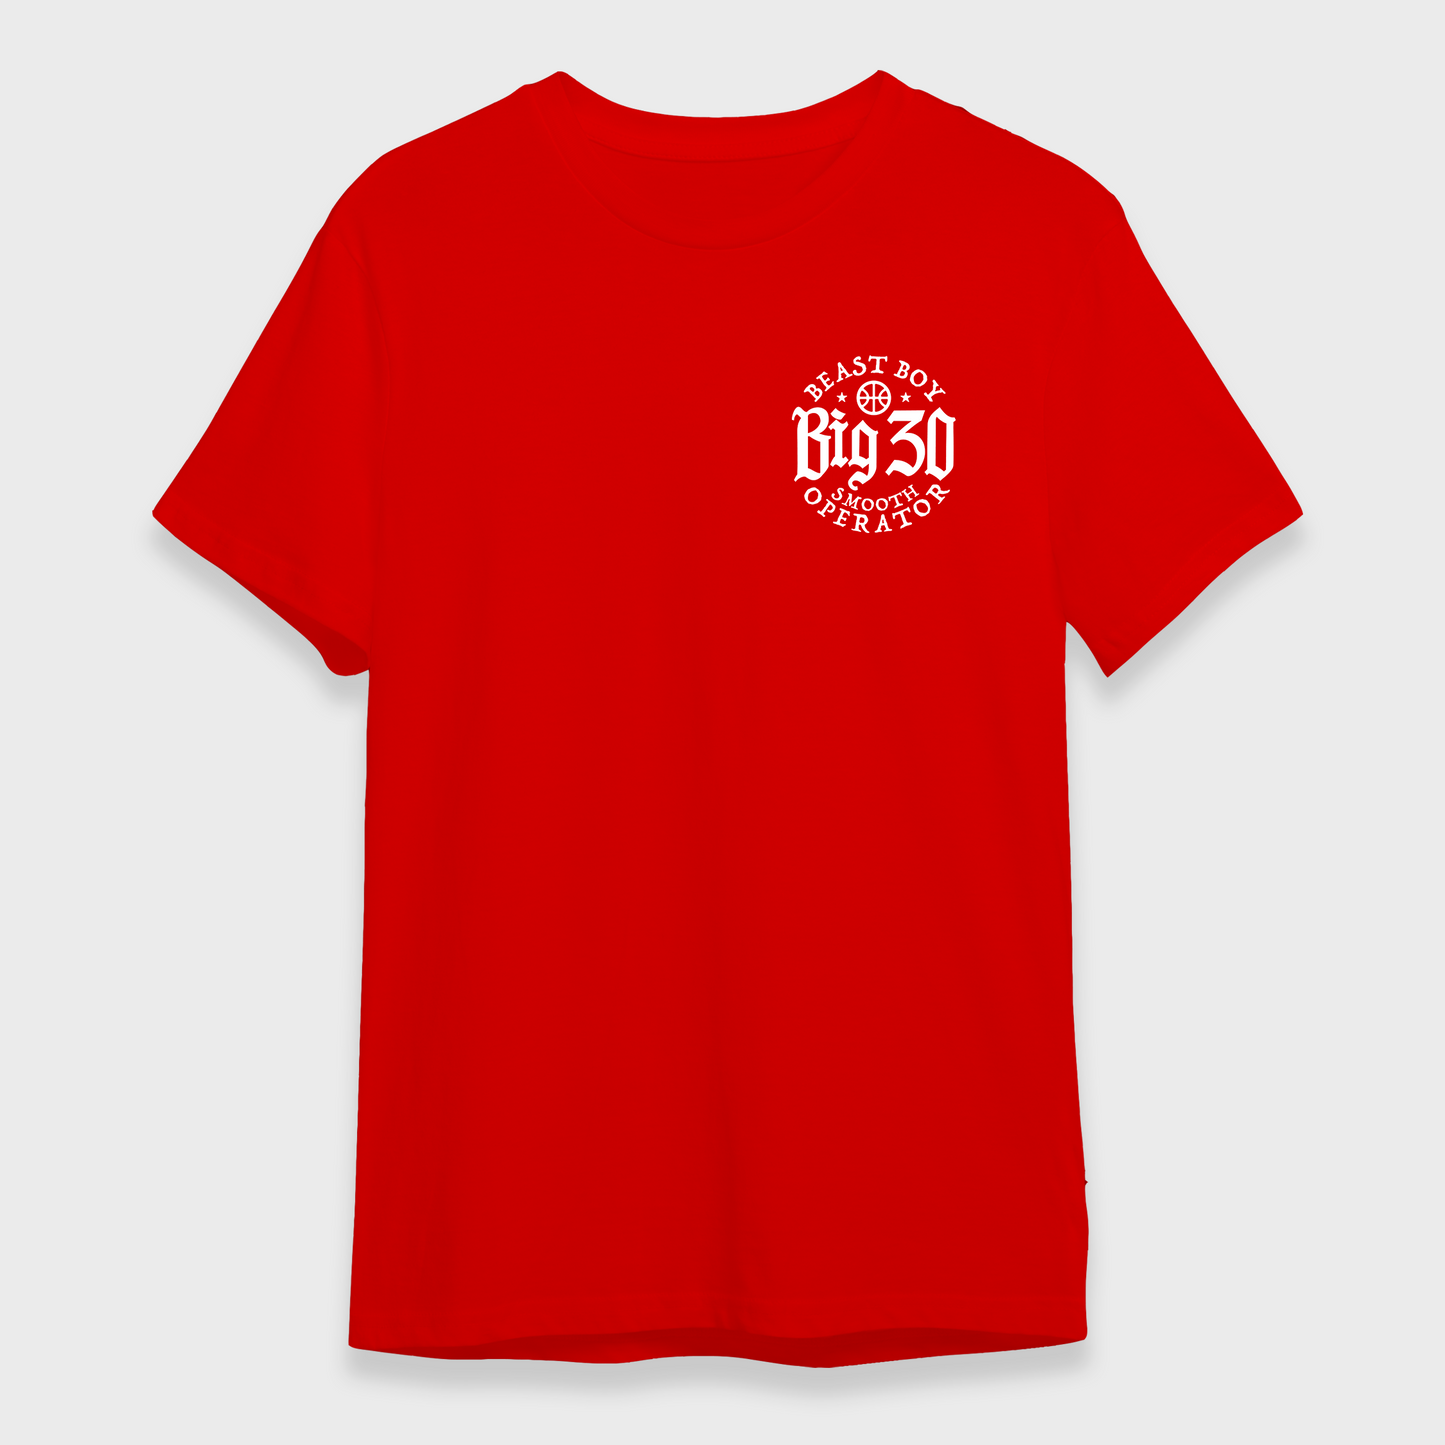 DJ Burns Jr Big 30 Logo Tee (Red)